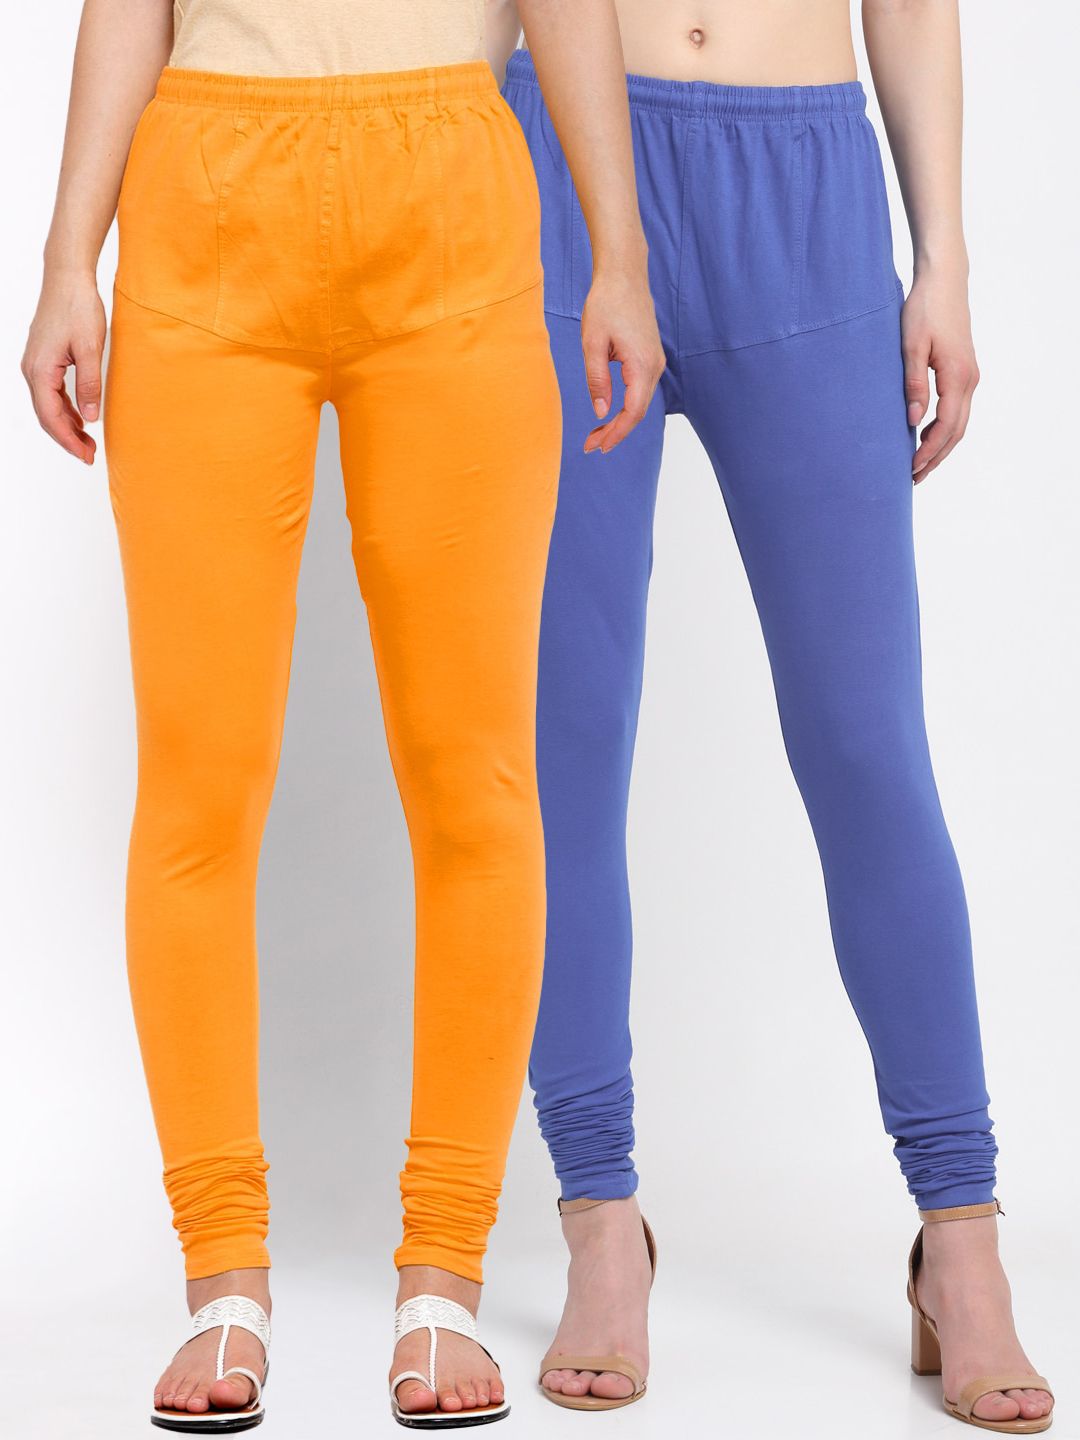 KLOTTHE Women Pack Of 2 Blue & Orange Solid Churidar-Length Cotton Leggings Price in India